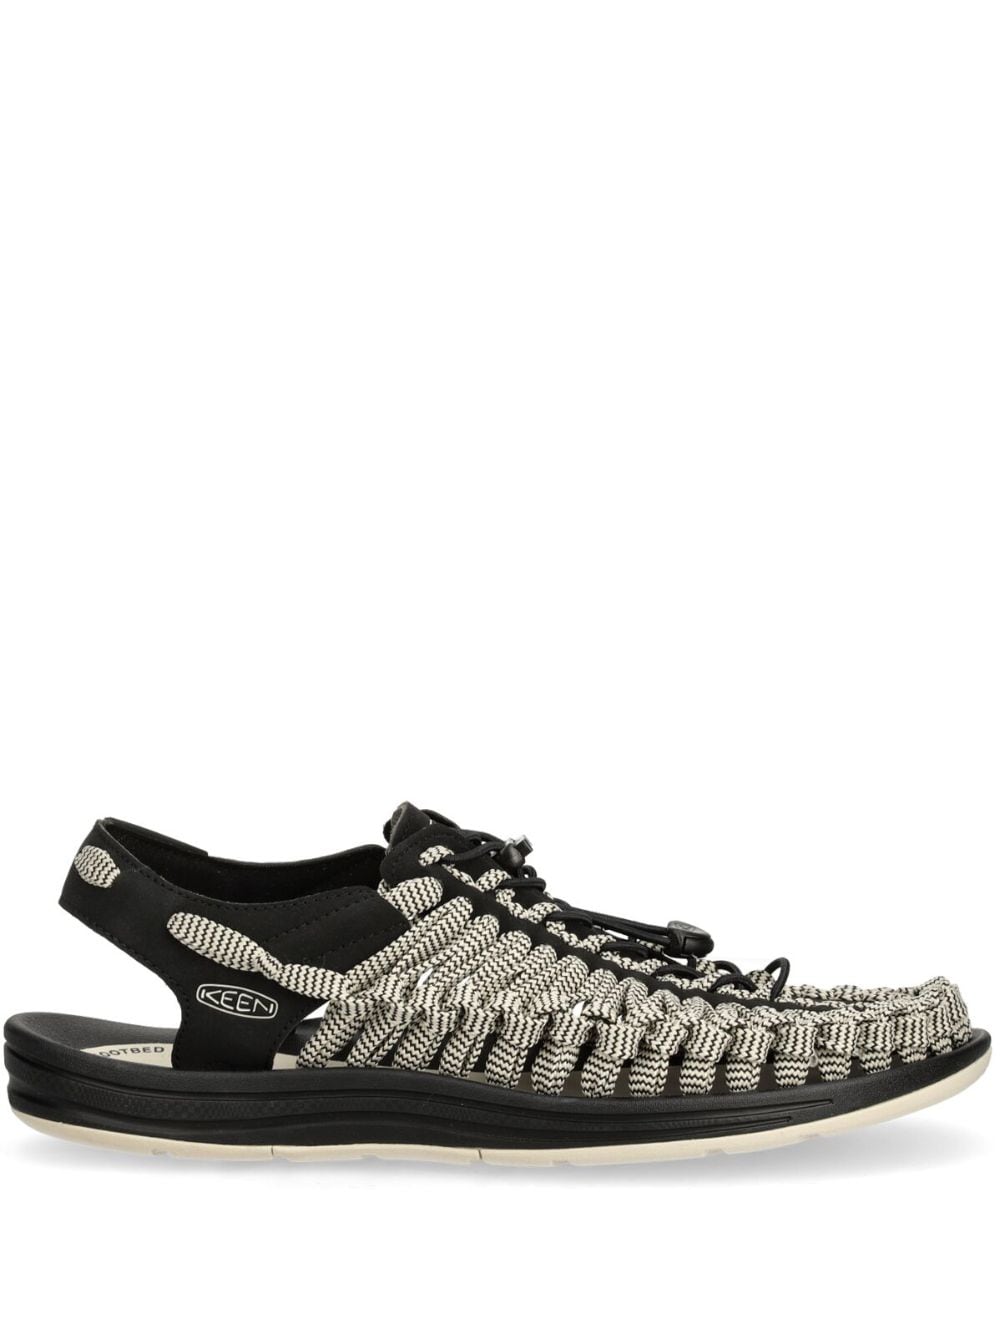 KEEN FOOTWEAR x RFW Uneek sandals - Black von KEEN FOOTWEAR